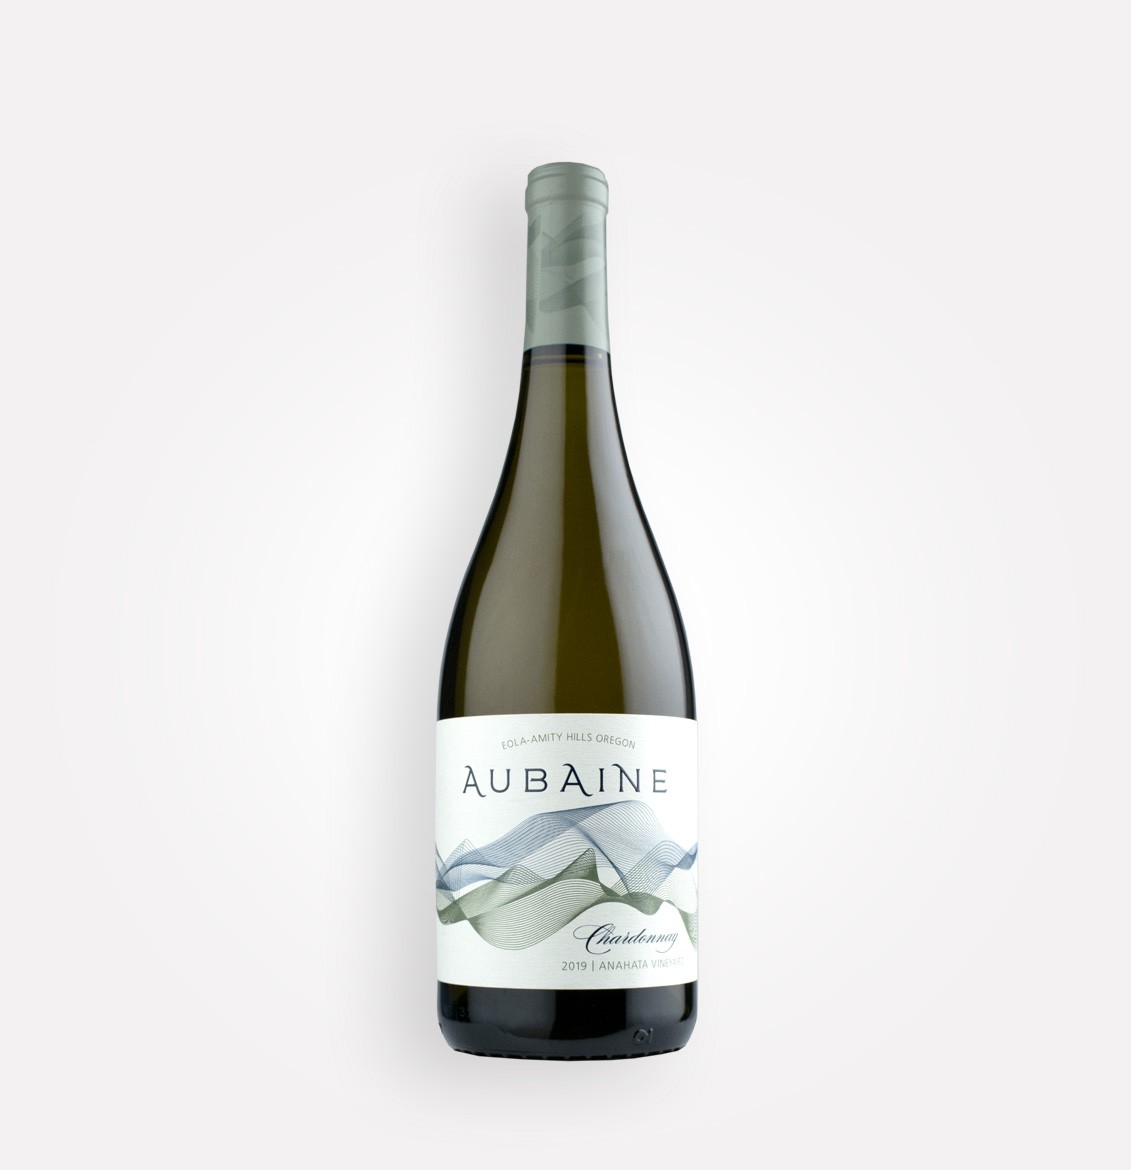 Bottle of Aubaine 2019 Chardonnay wine from Oregon's Eola-Amity Hills